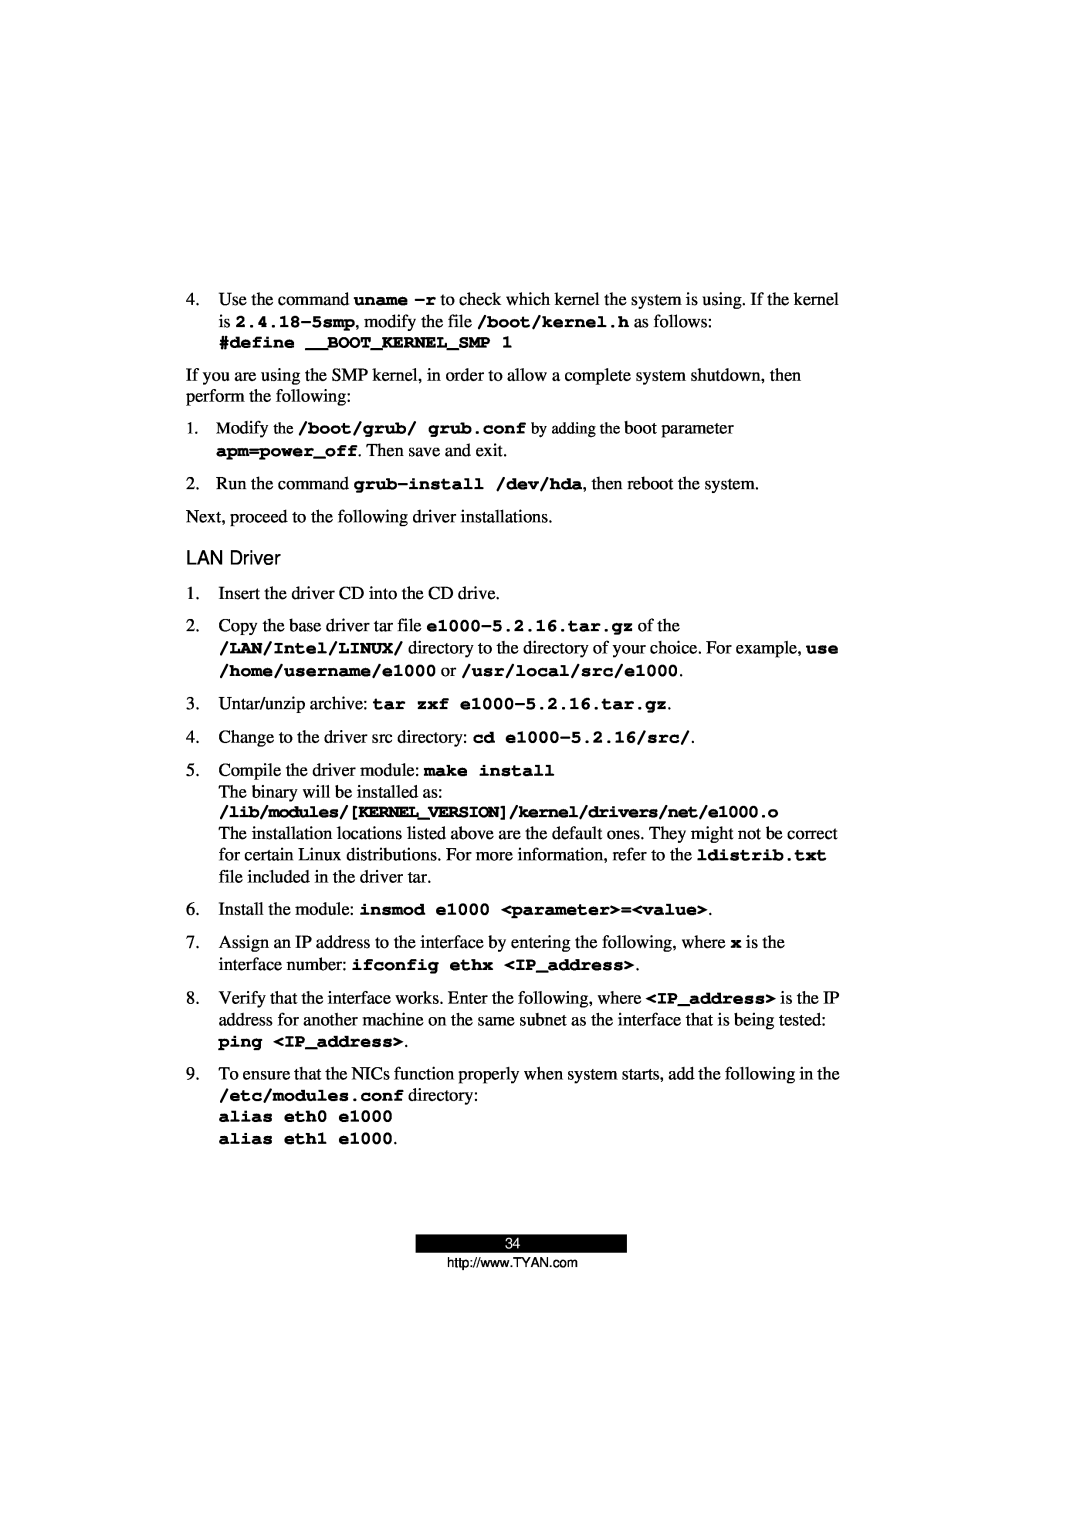 Tyan Computer Transport GS12 manual #define BOOTKERNELSMP, Untar/unzip archive tar zxf e1000-5.2.16.tar.gz, LAN Driver 